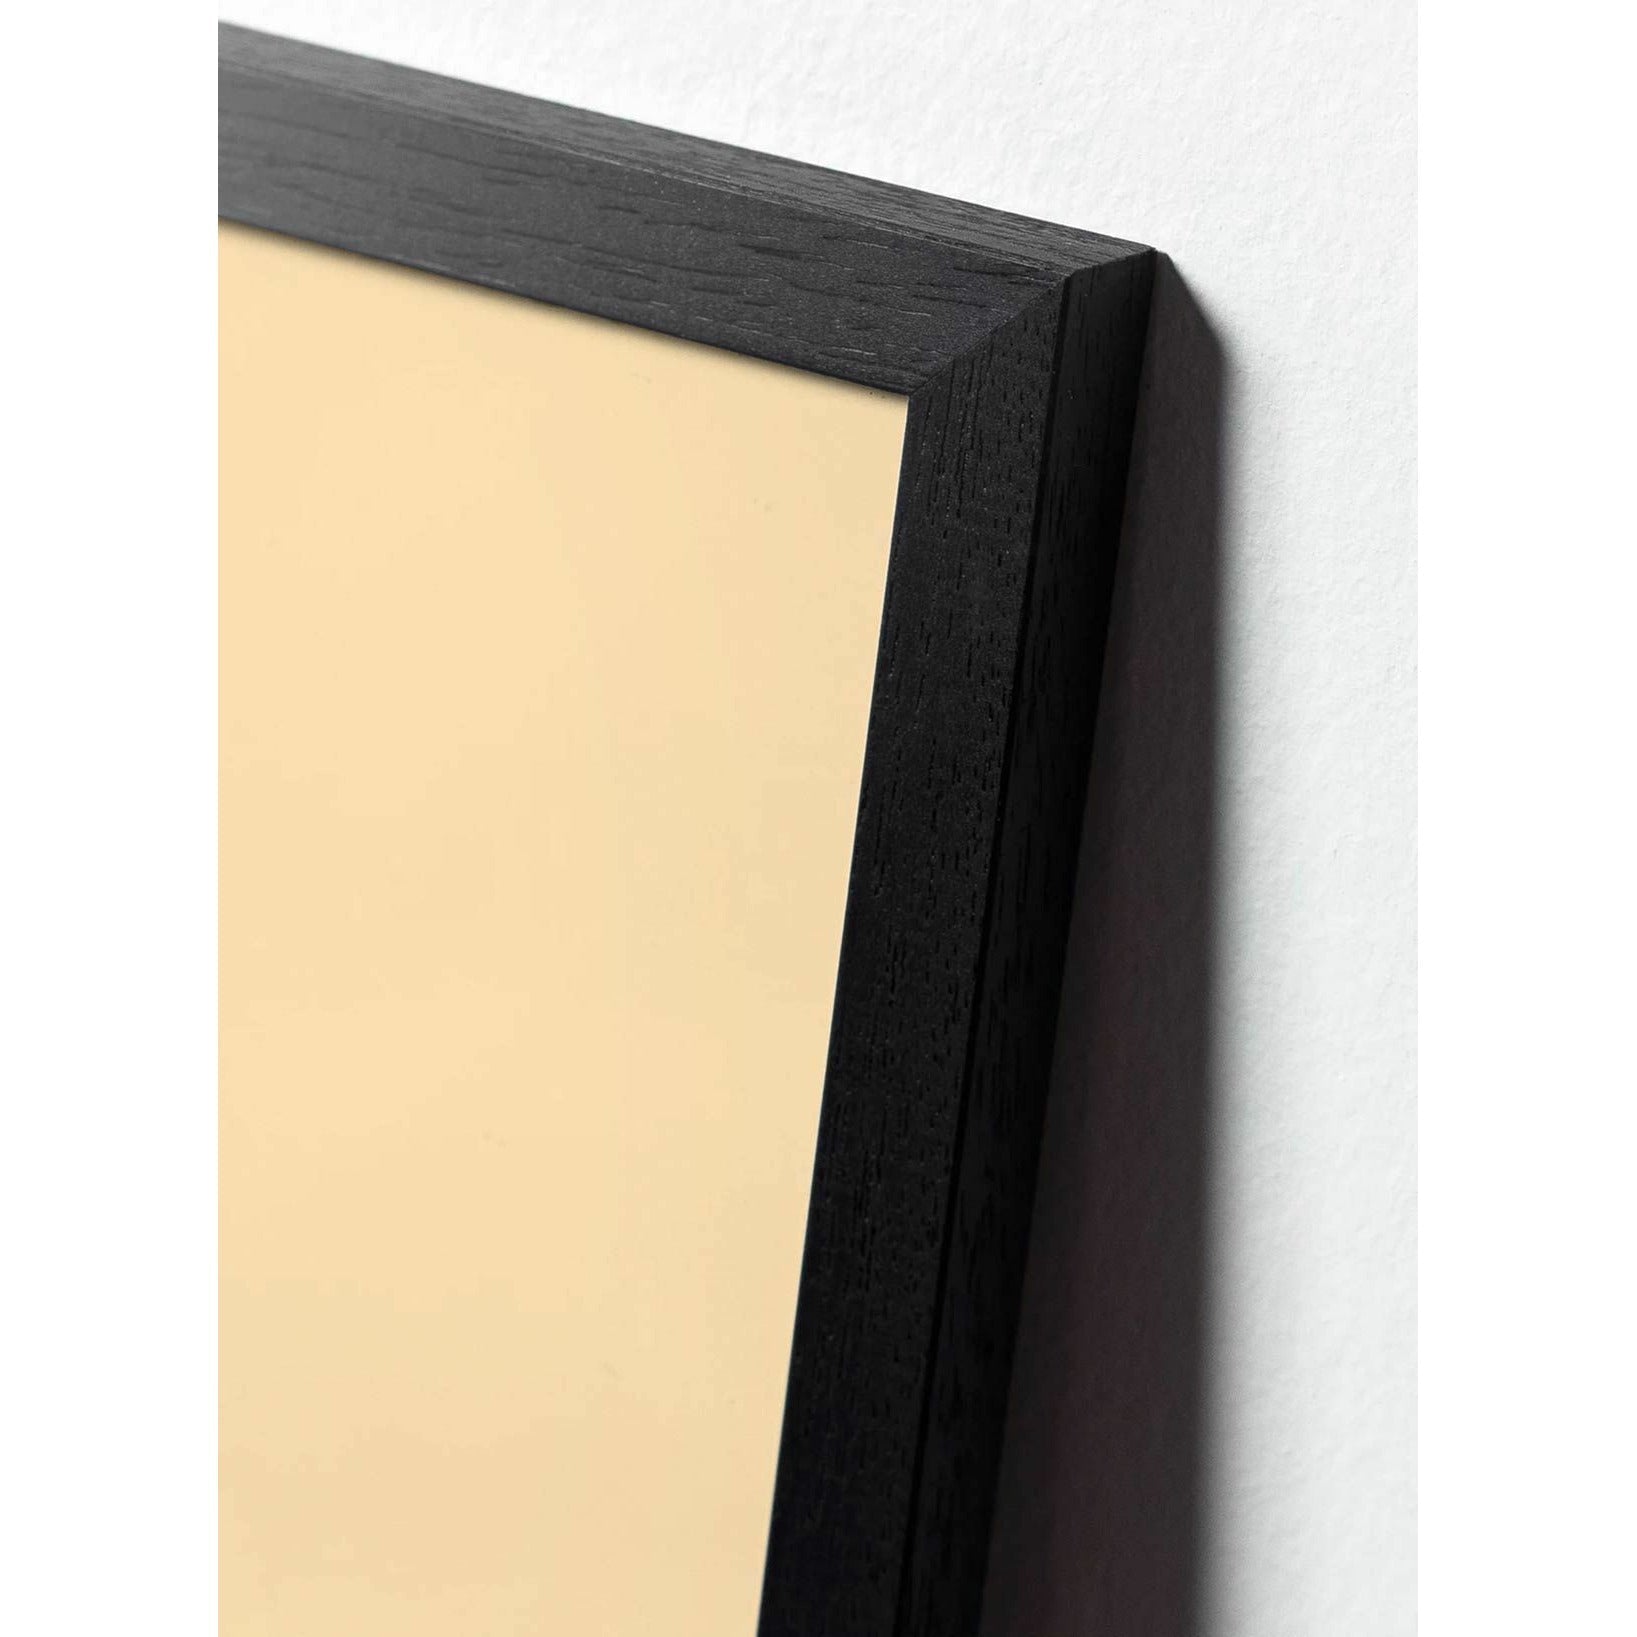 Póster de icono de diseño de caída de creación, marco hecho de madera lacada negra 50 x70 cm, morado